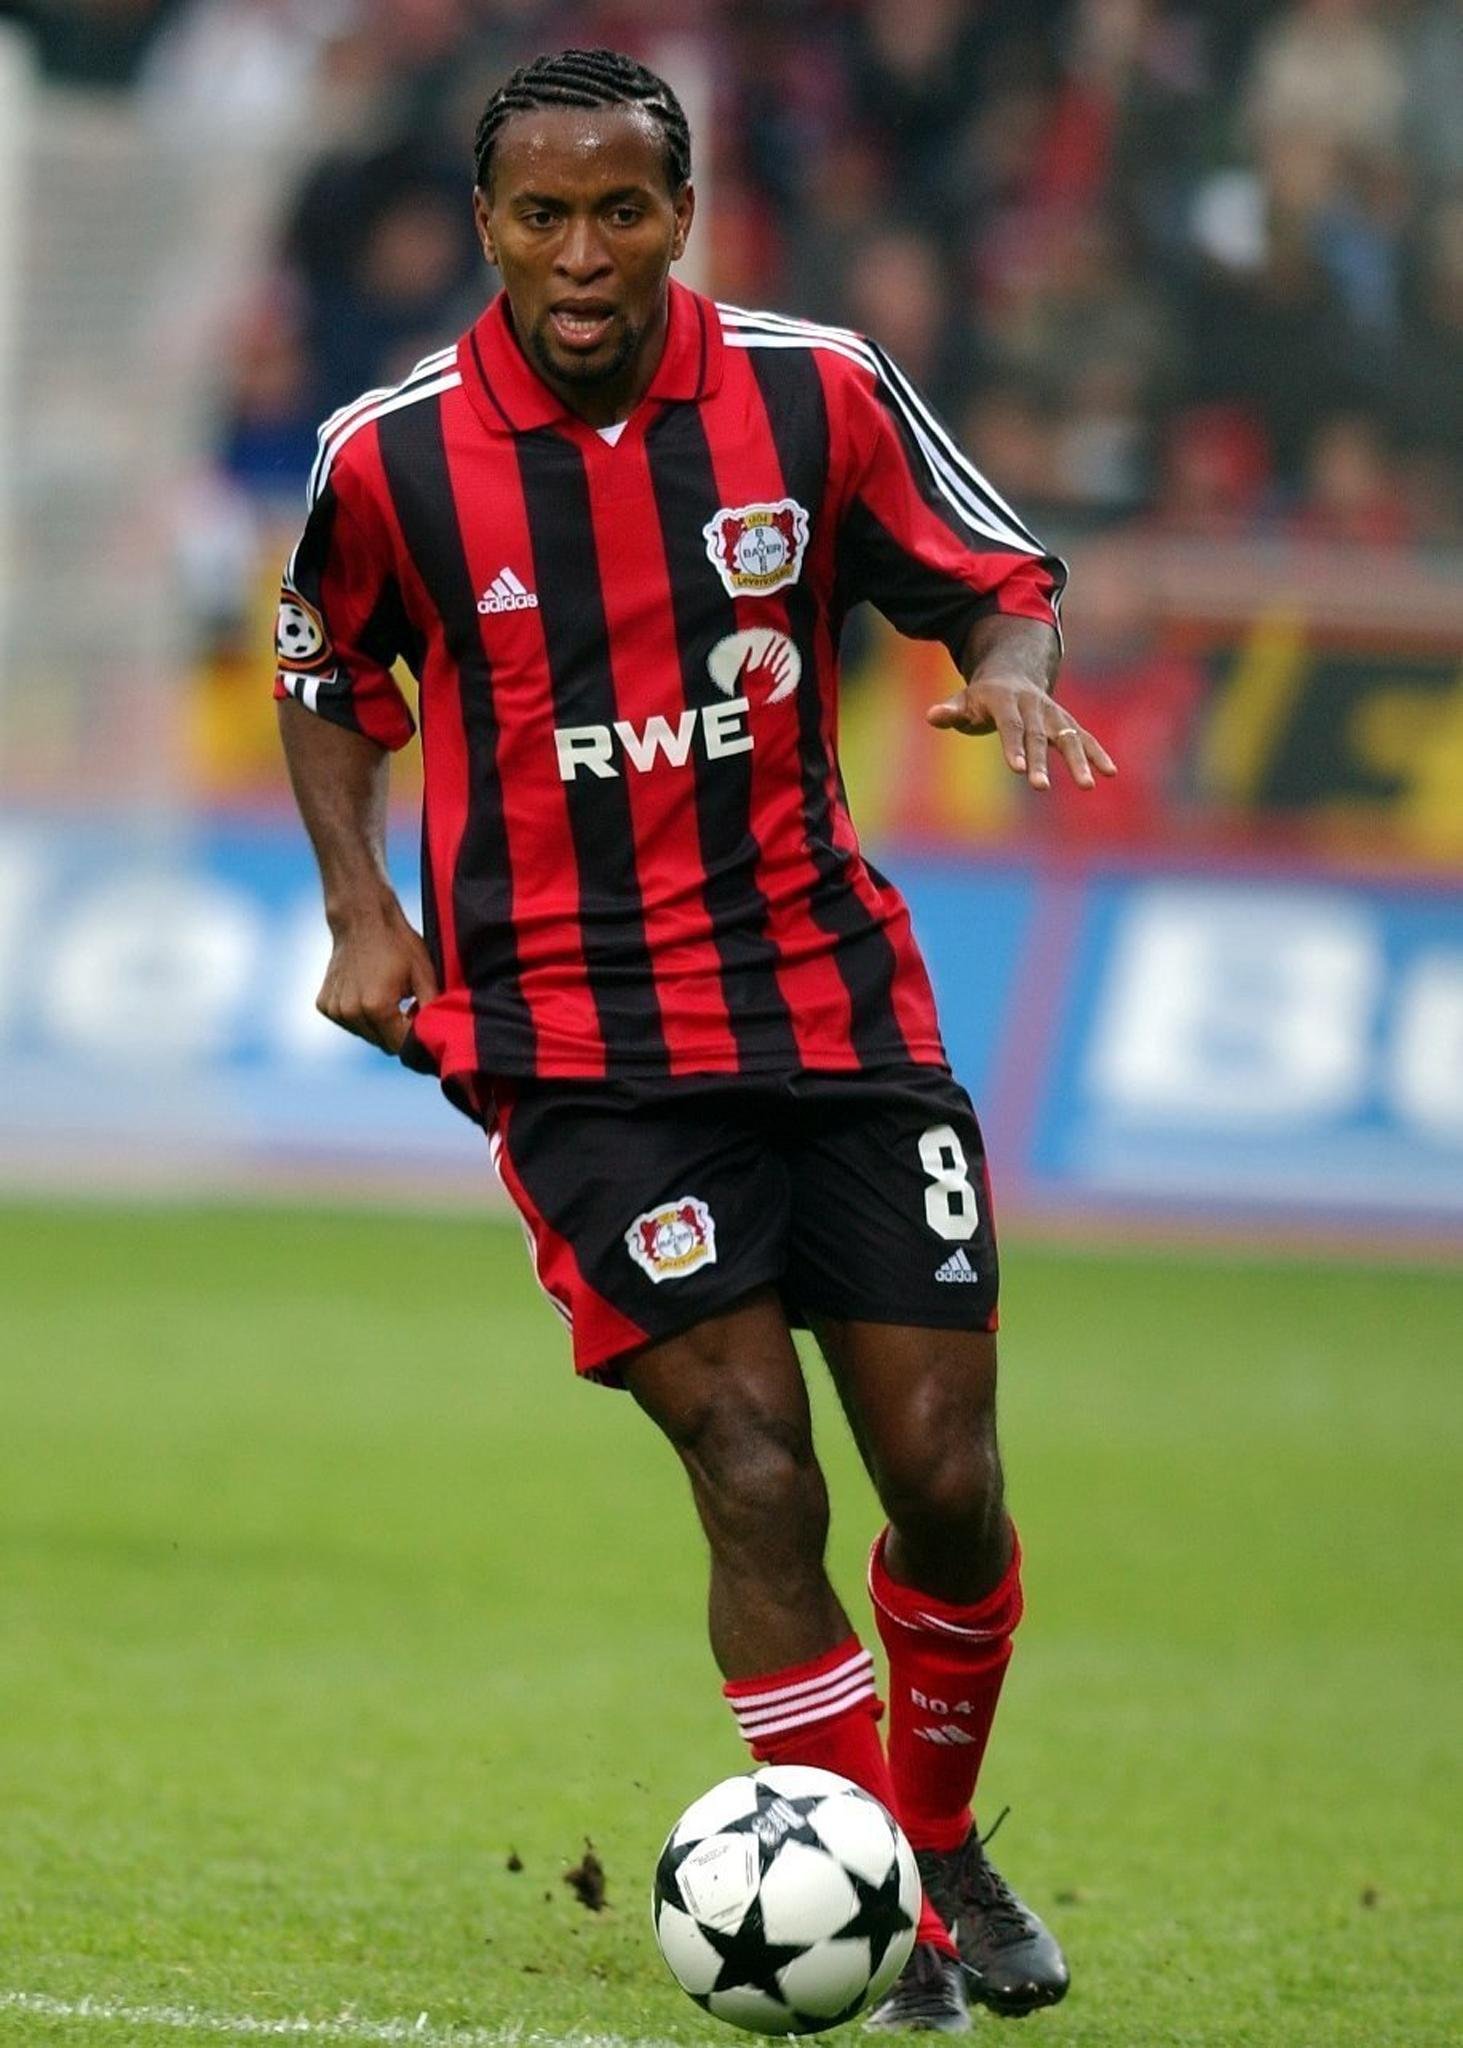 Ze Roberto experienced success with Bayer Leverkusen and Bayern Munich